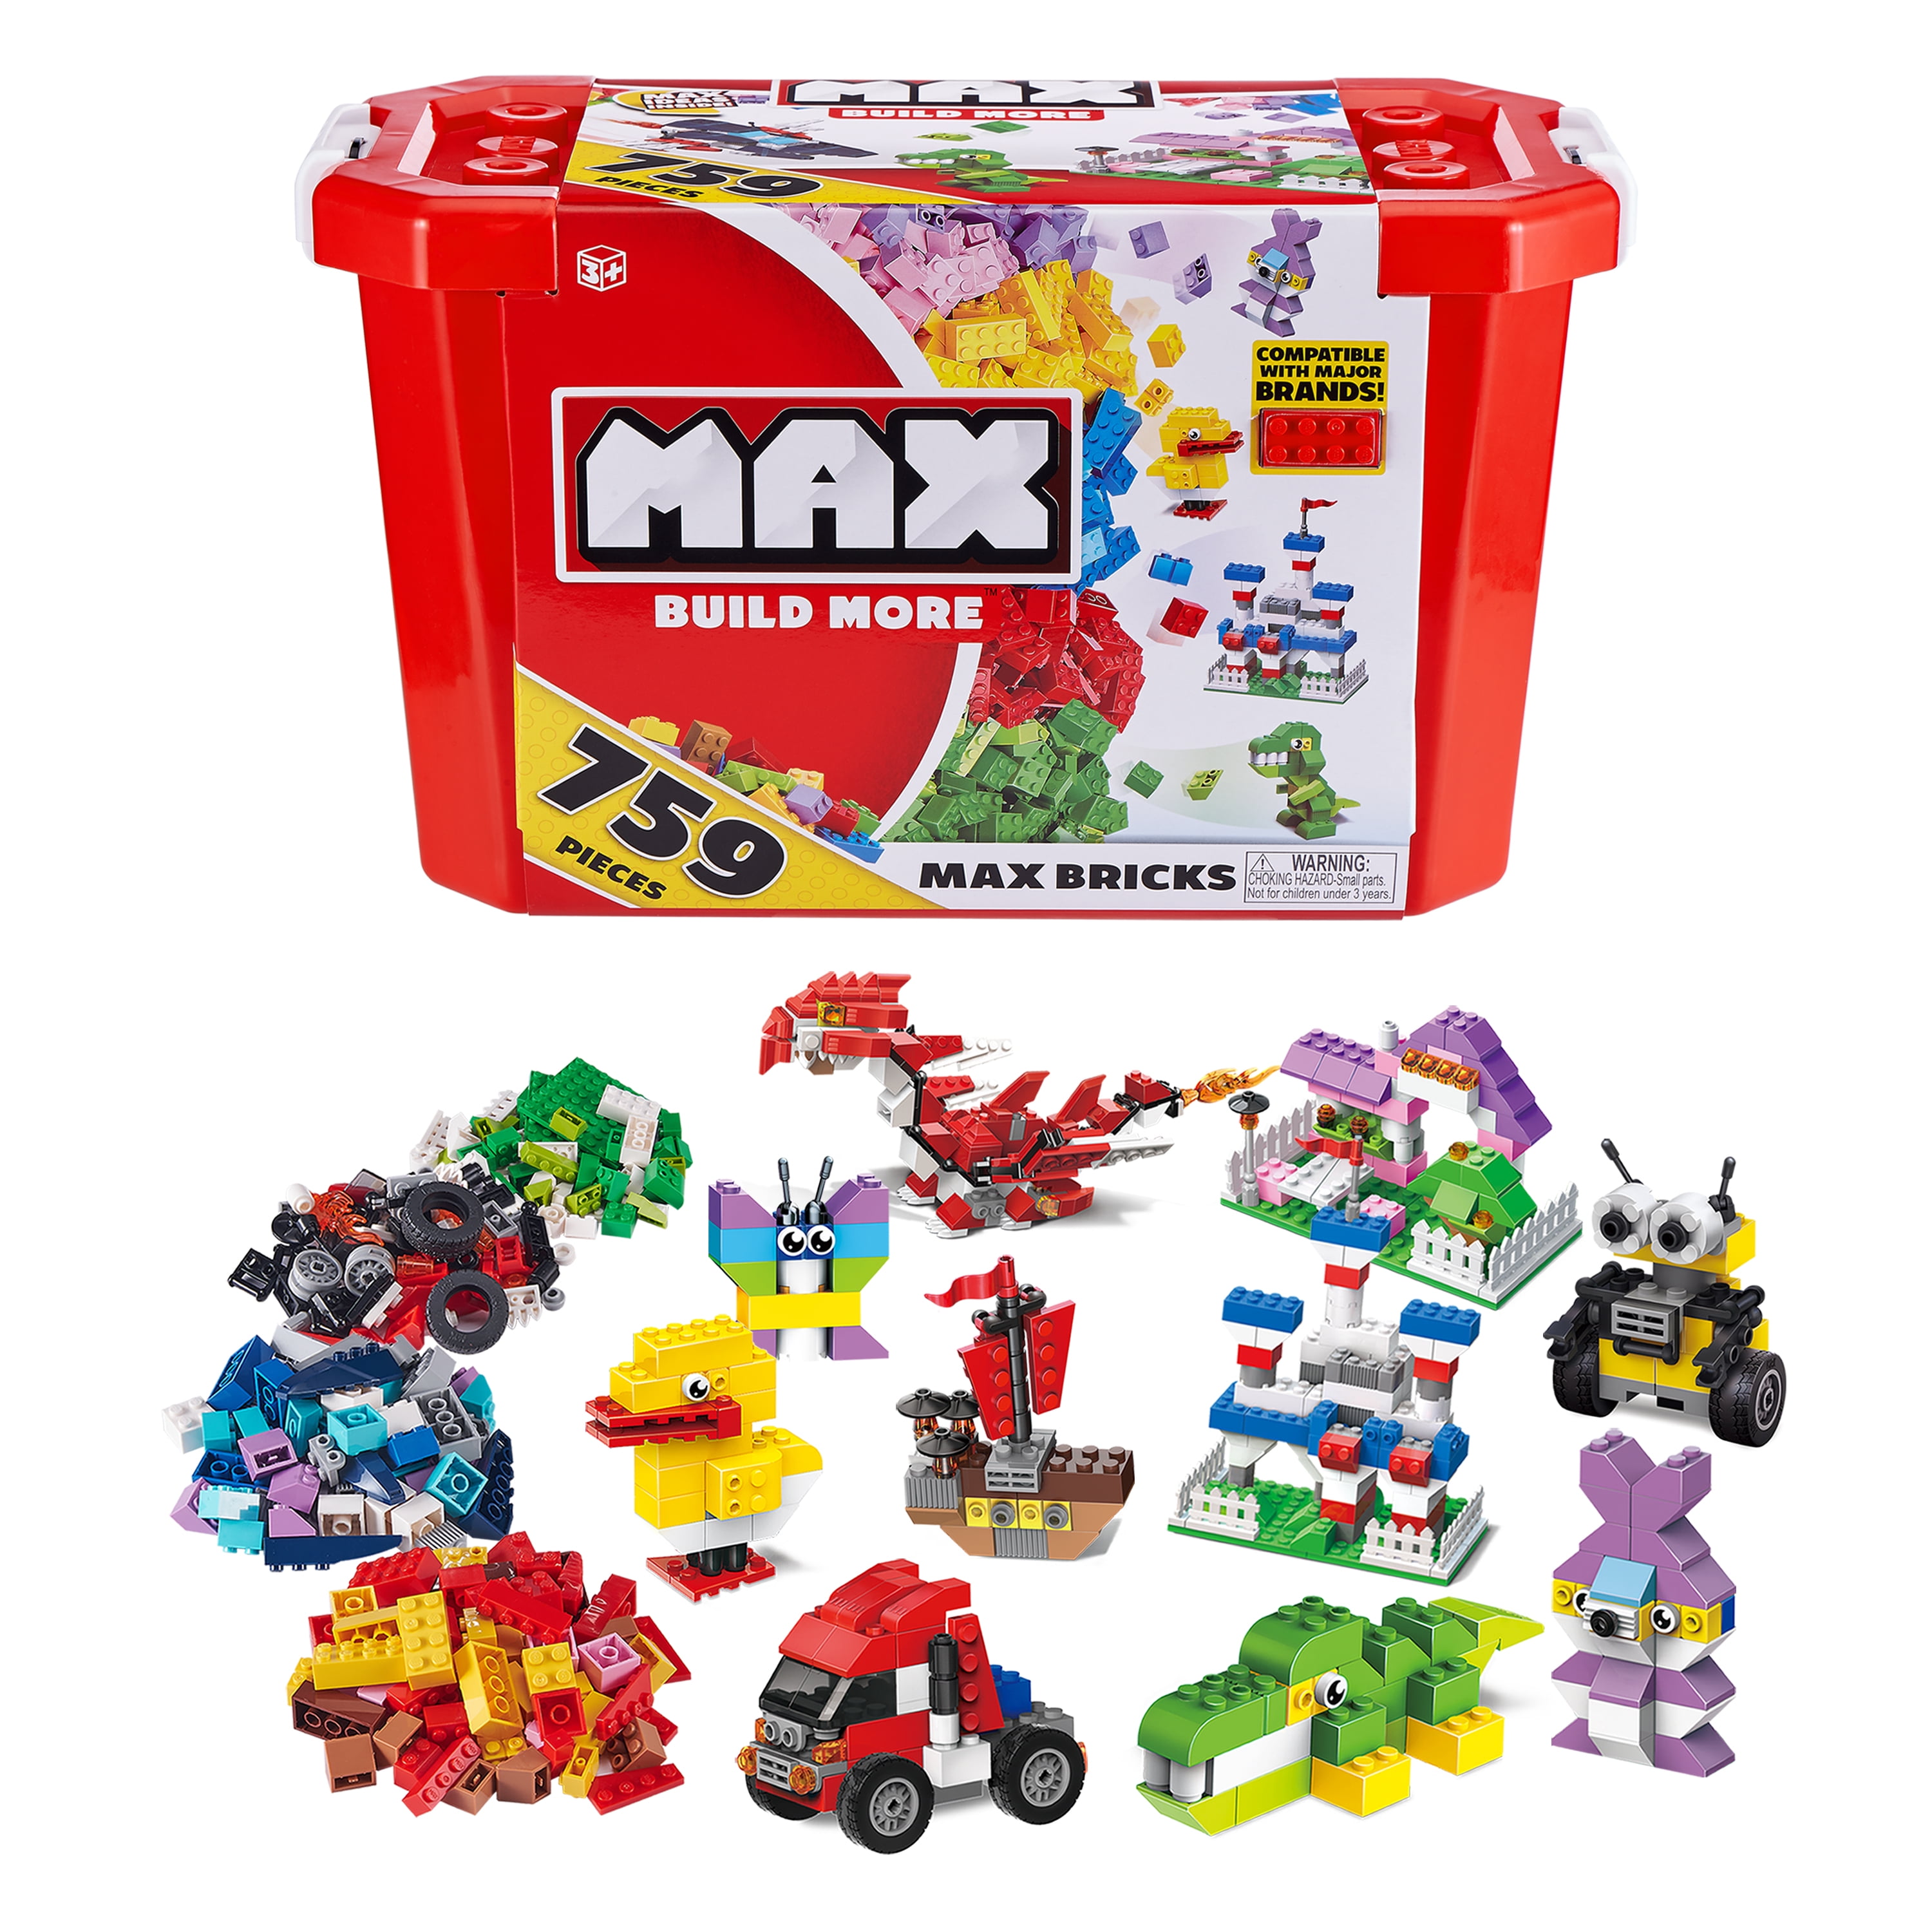 MAX Build More Premium Building Bricks Set (759 Bricks) - Major Brick Brands Compatible